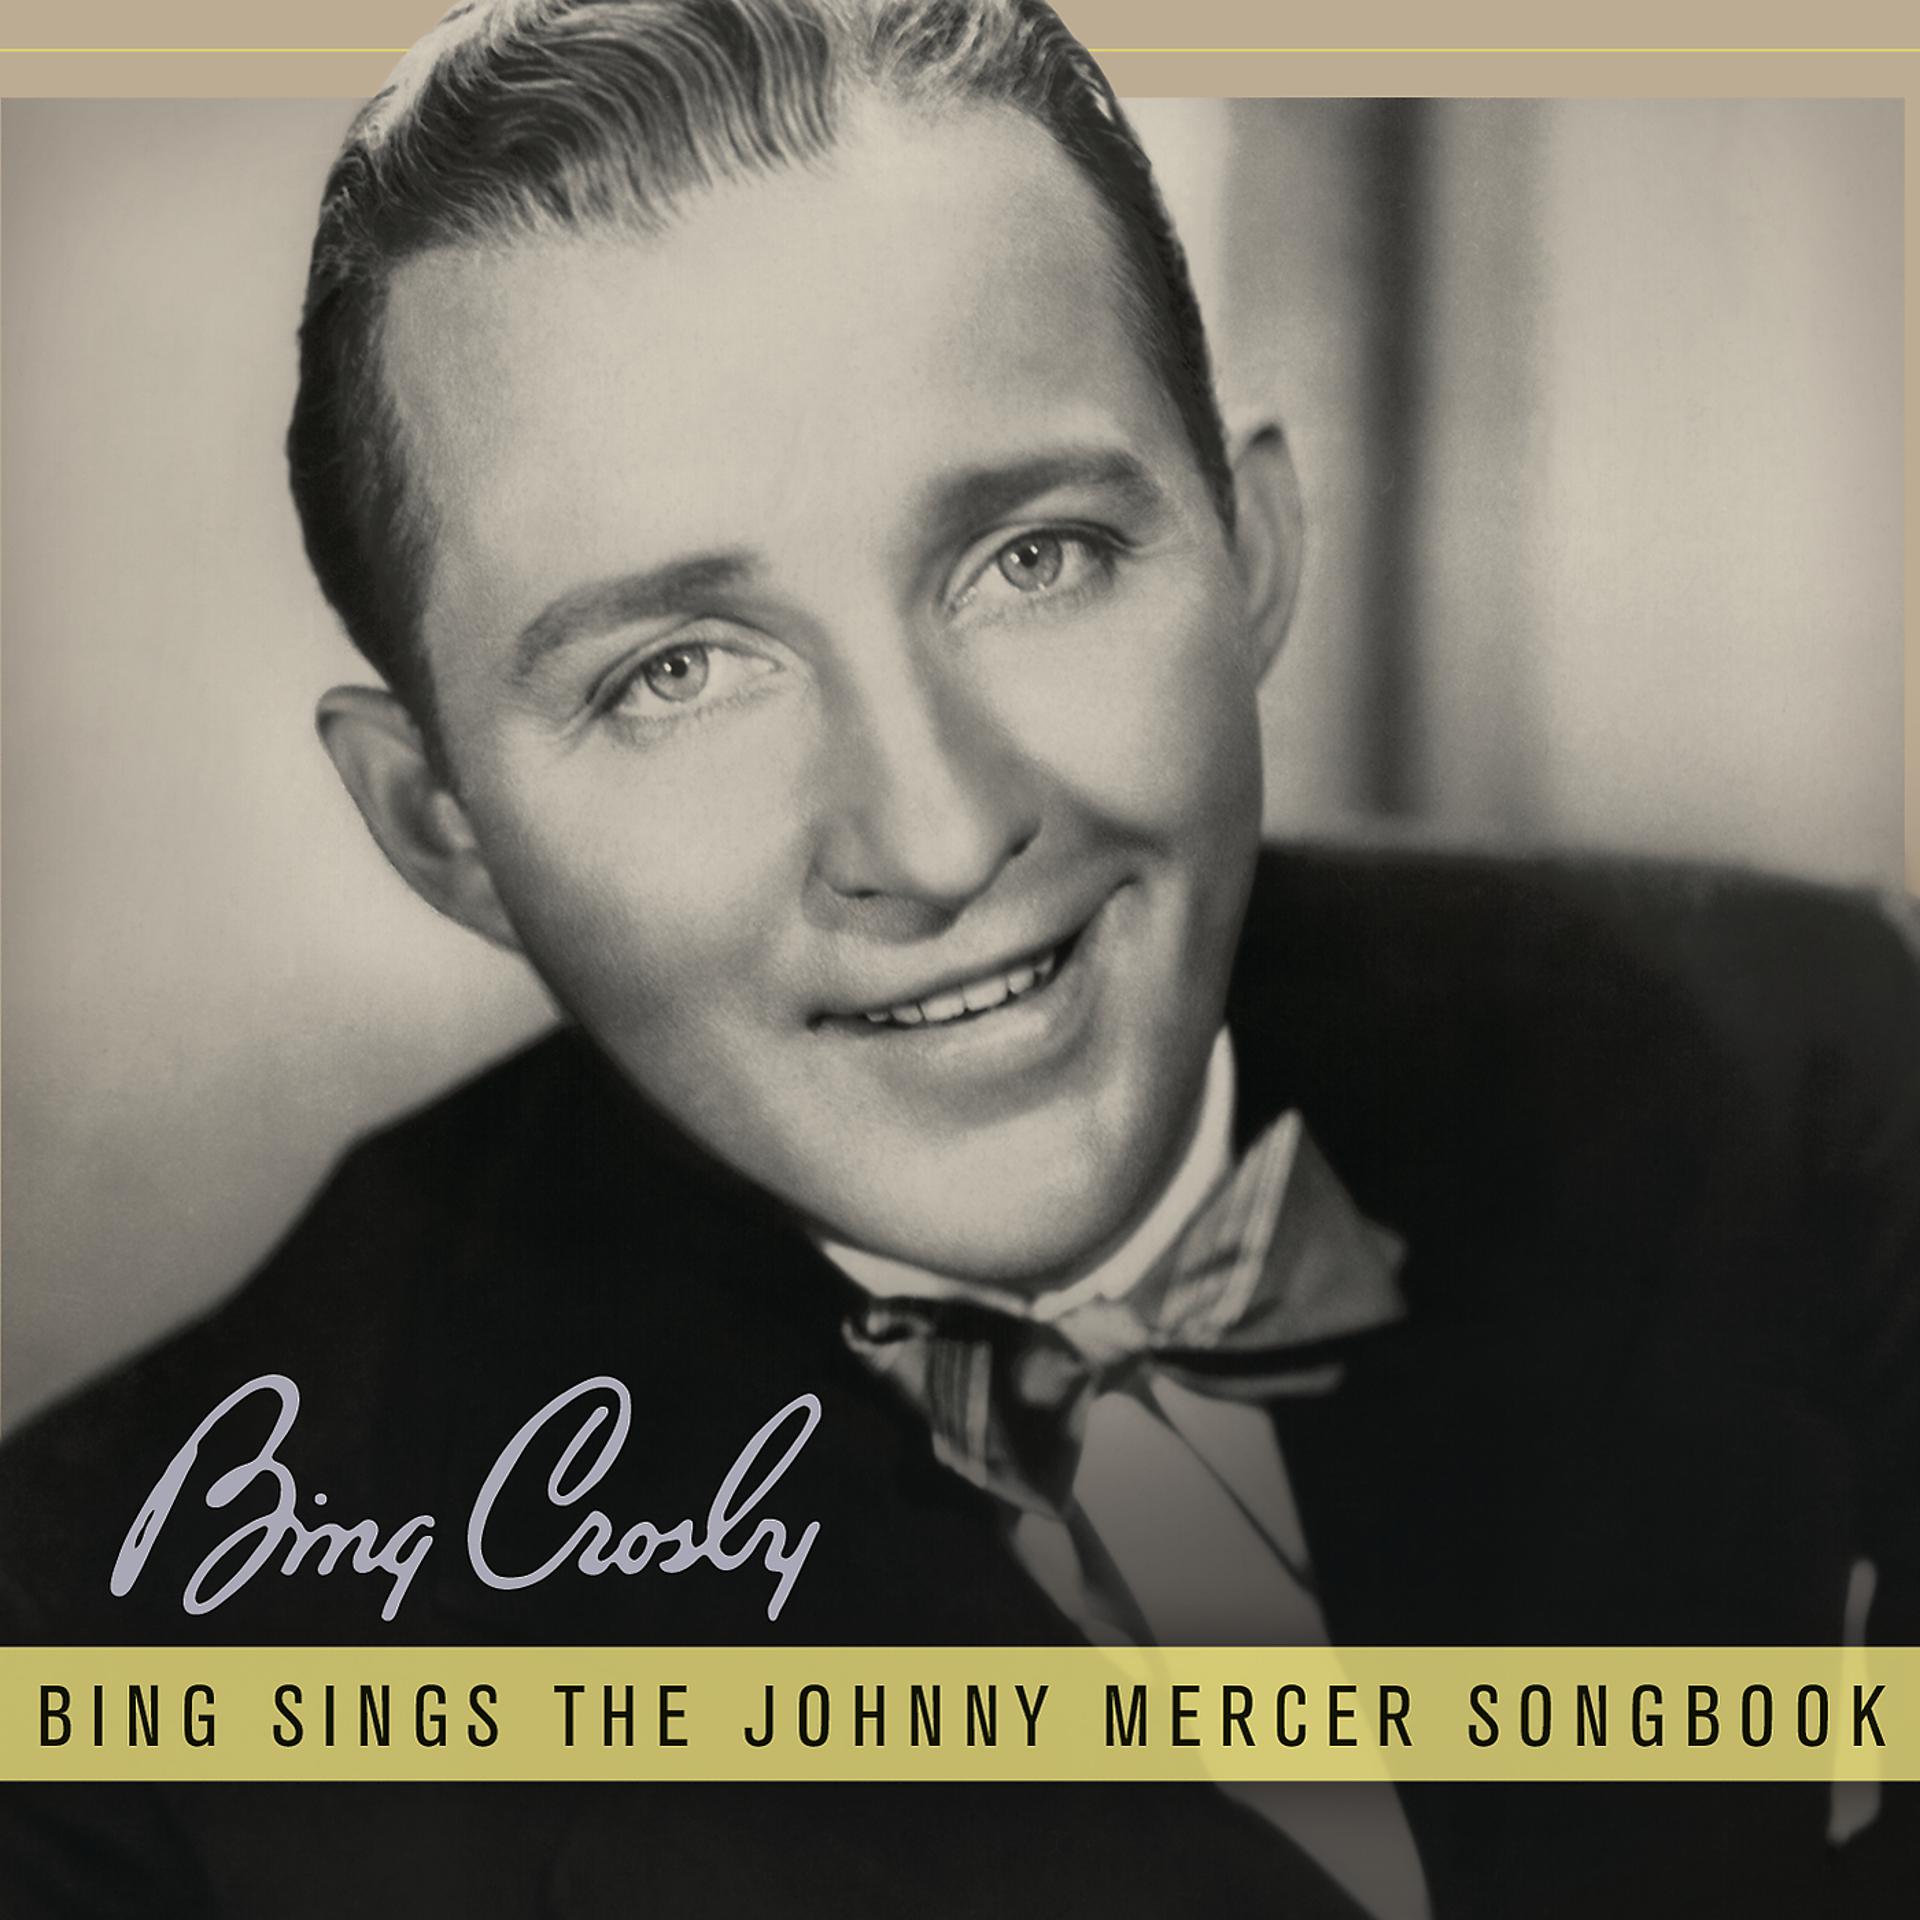 Бинг Кросби. "Bing Crosby" && ( исполнитель | группа | музыка | Music | Band | artist ) && (фото | photo). John sings